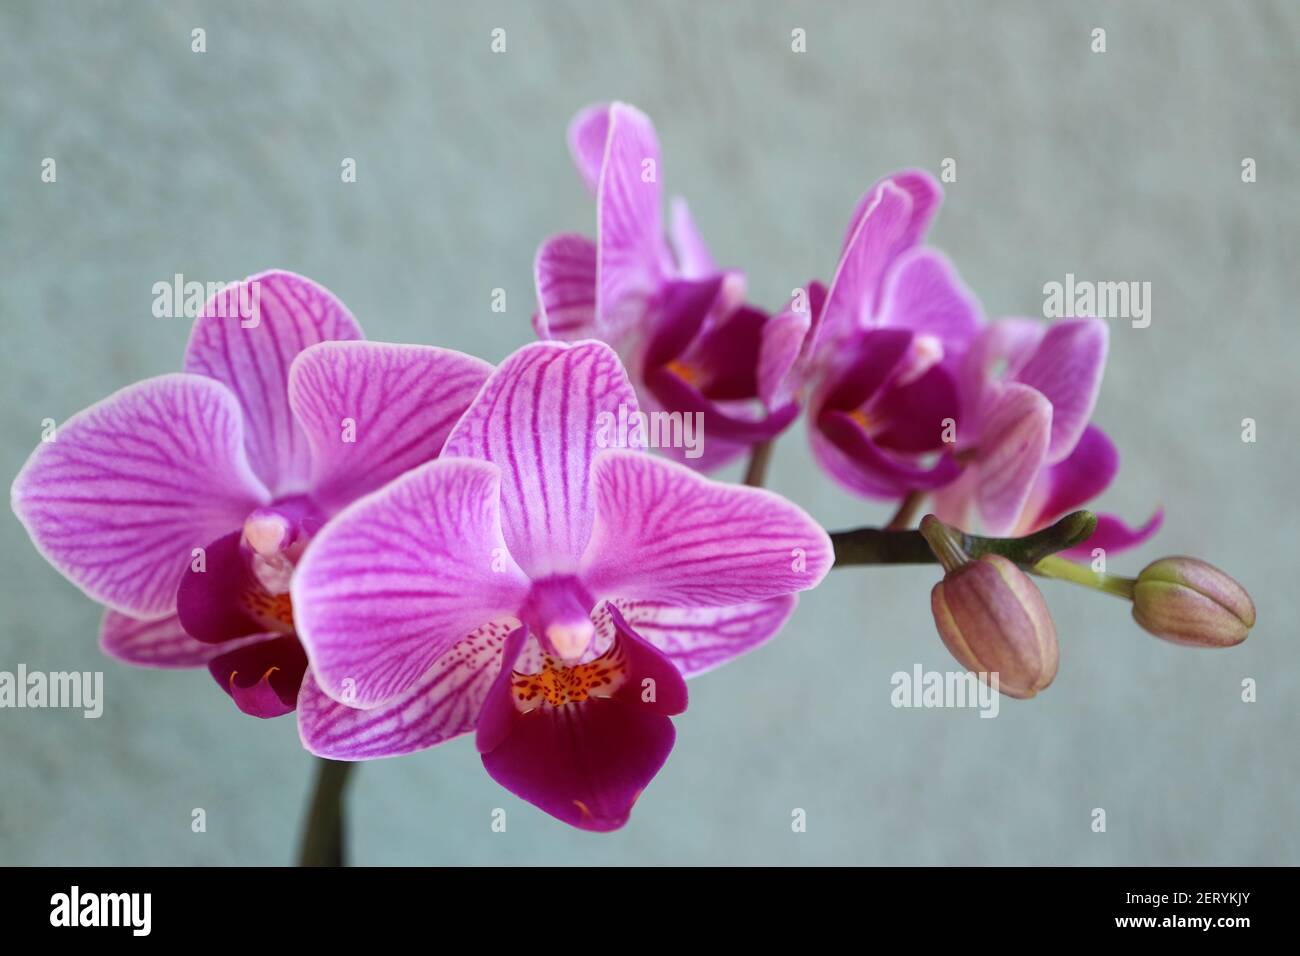 Mini orquídea púrpura con delicados pétalos , brotes y patrones pétalo , púrpura orquídea macro, cabeza de flor, belleza en la naturaleza, flor exótica, foto macro Foto de stock